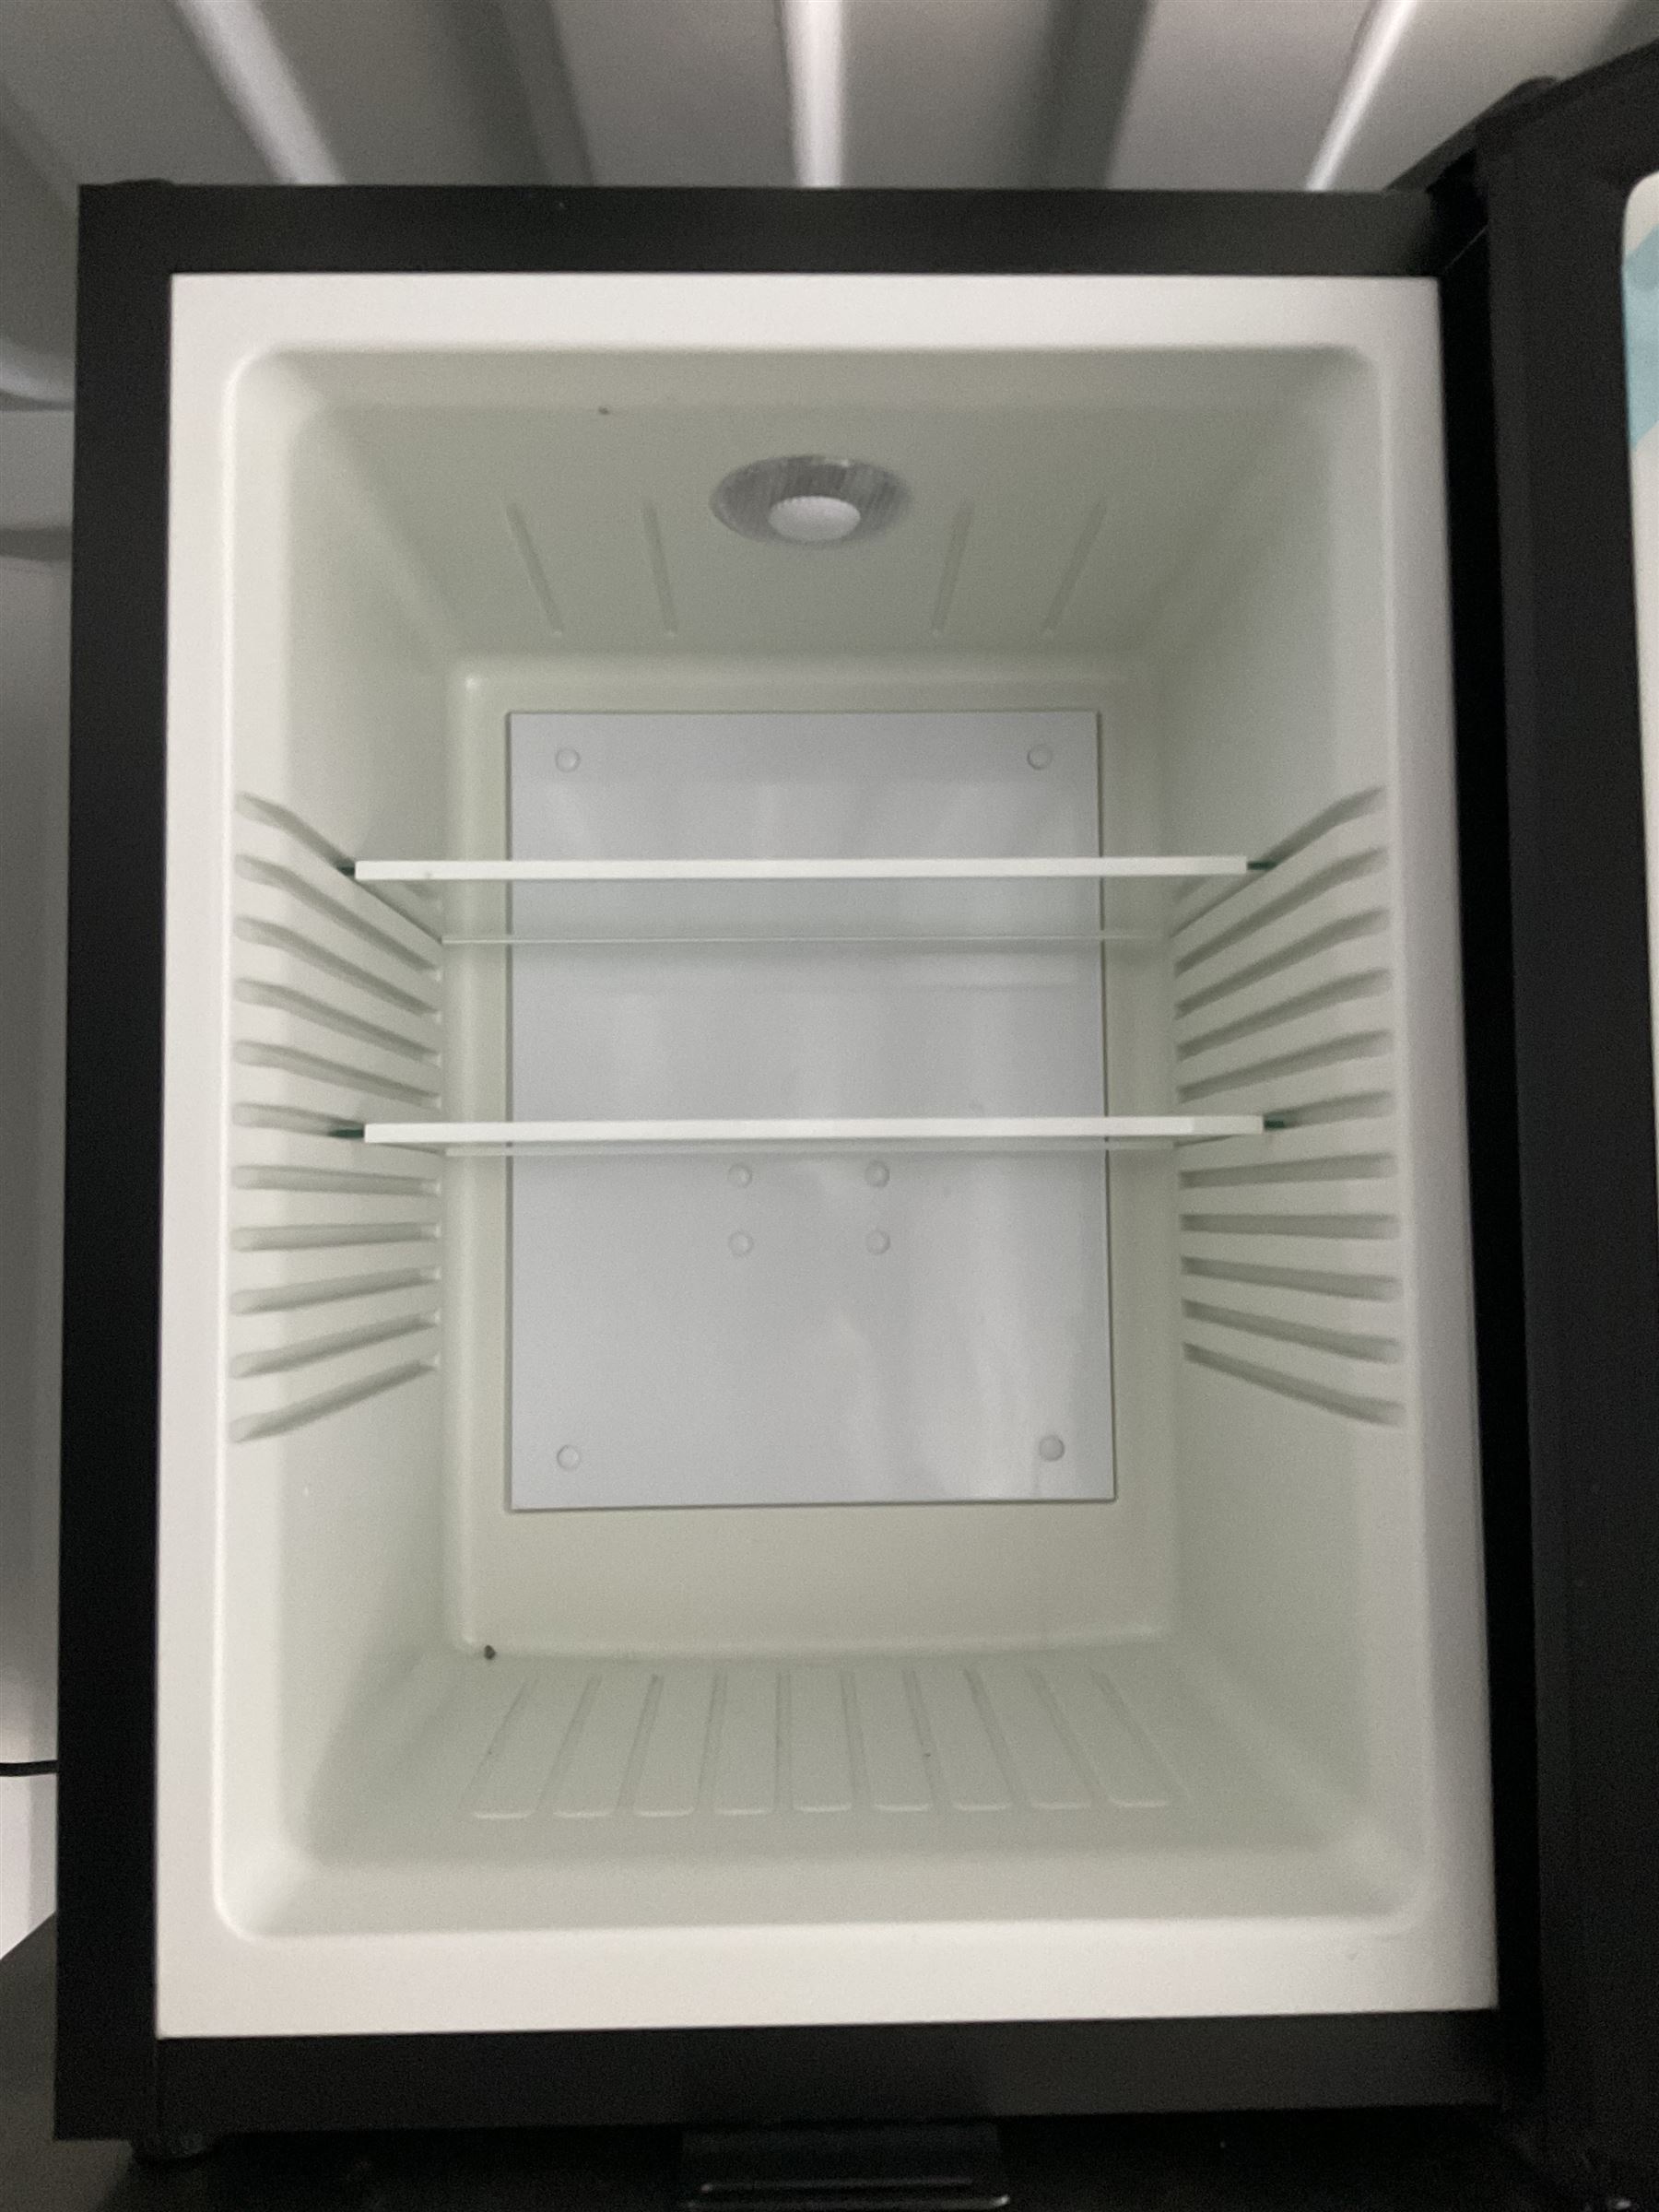 BARCOOL Mini-fridge - Image 2 of 3